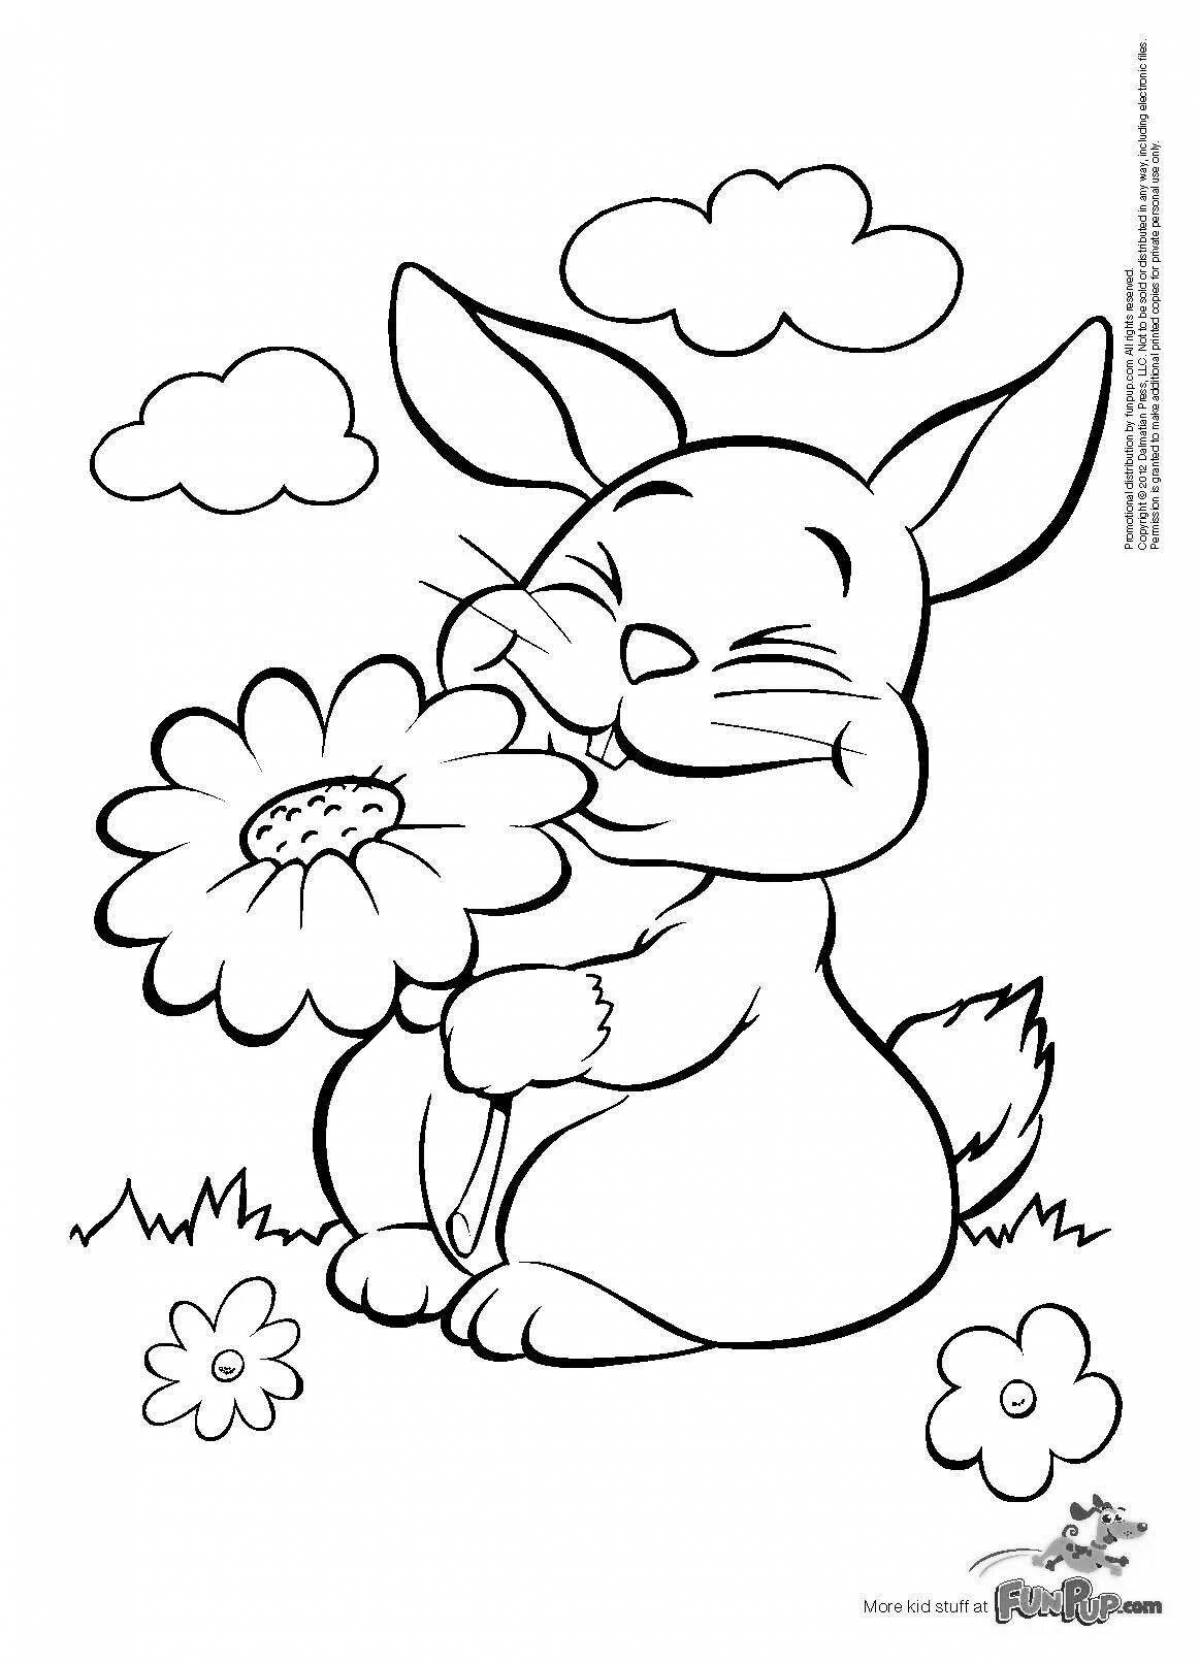 Brilliant bunny coloring